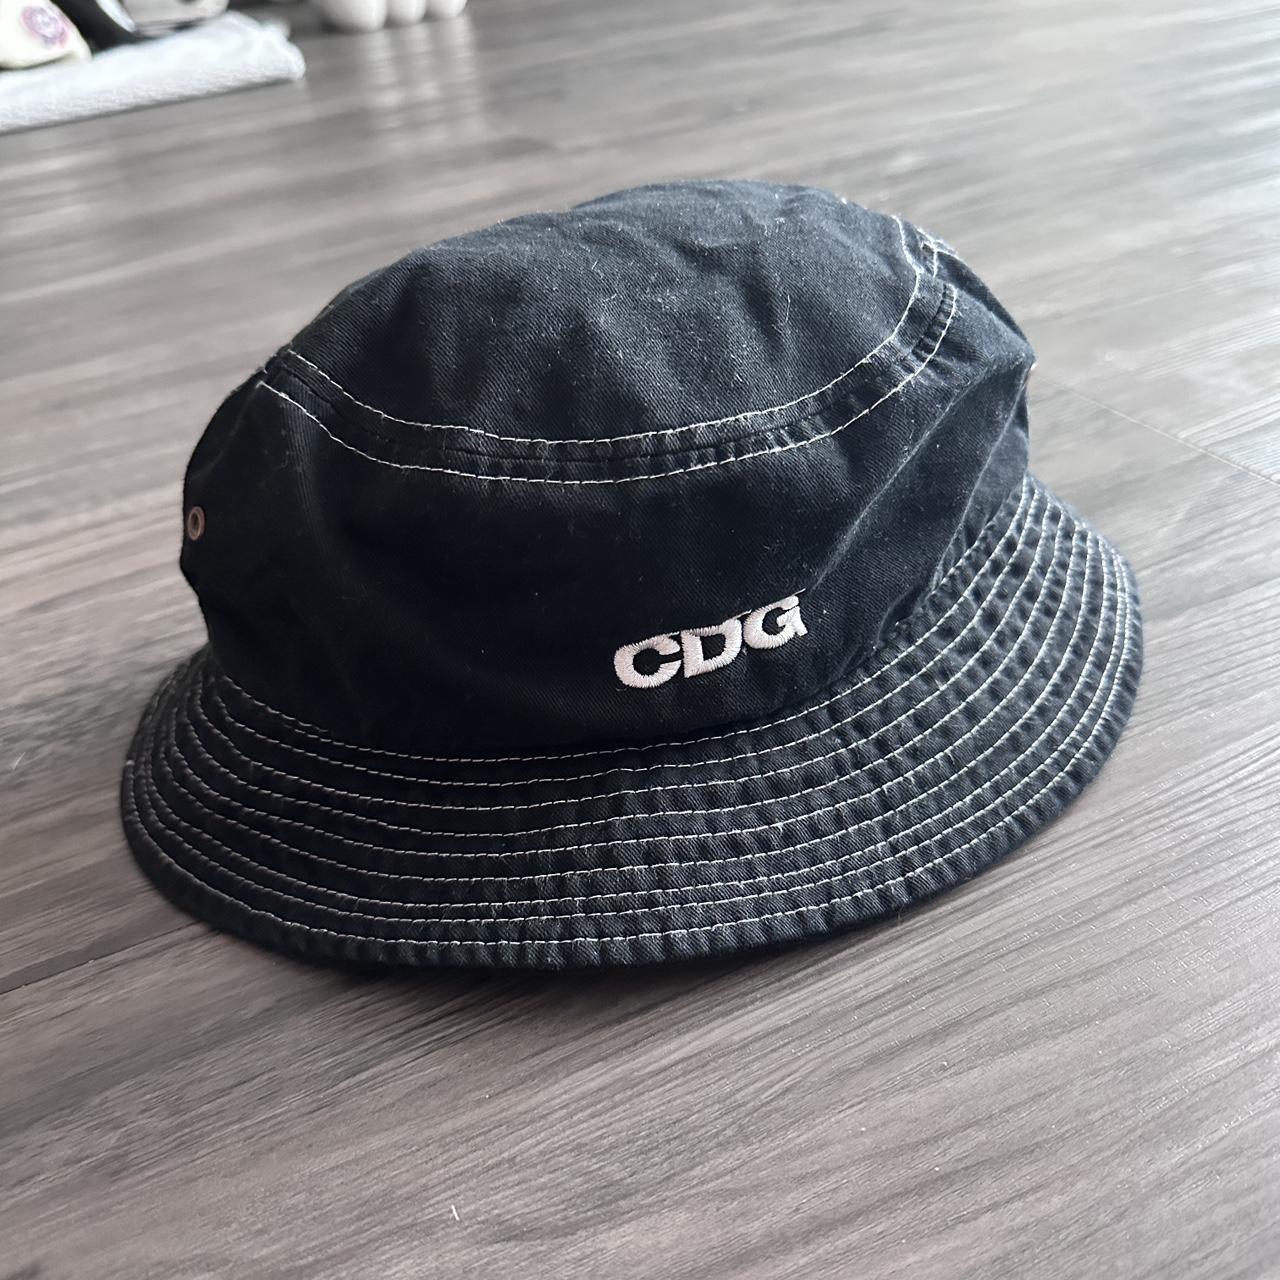 Cdg bucket hat Black Size L/XL Great condition - Depop